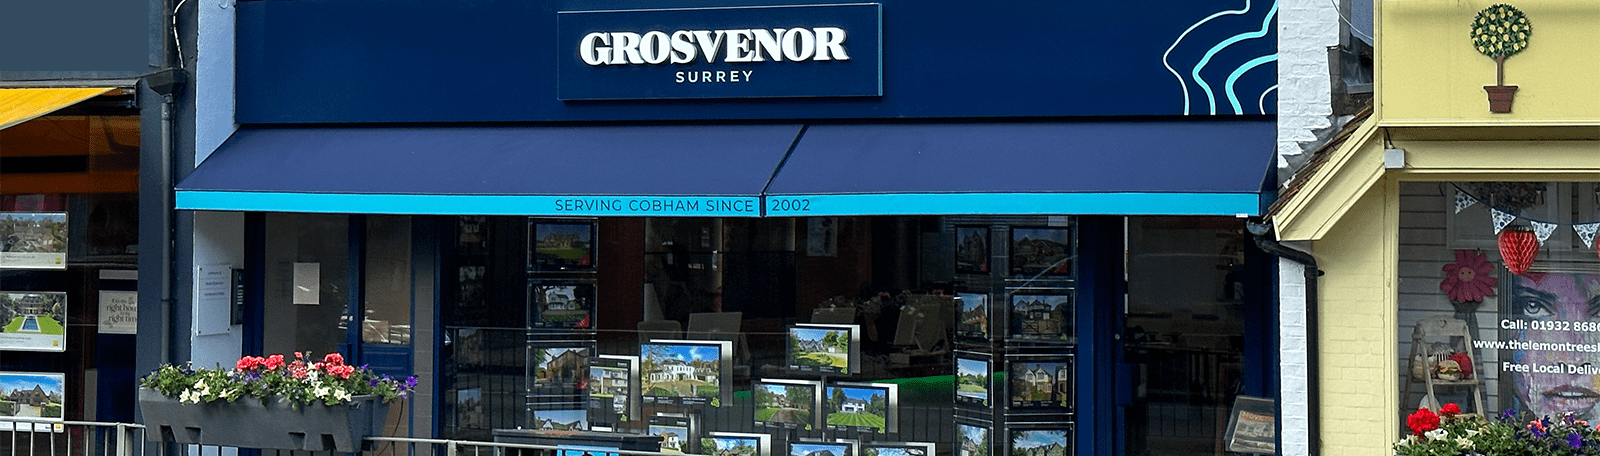 Grosvenor’s cobham office